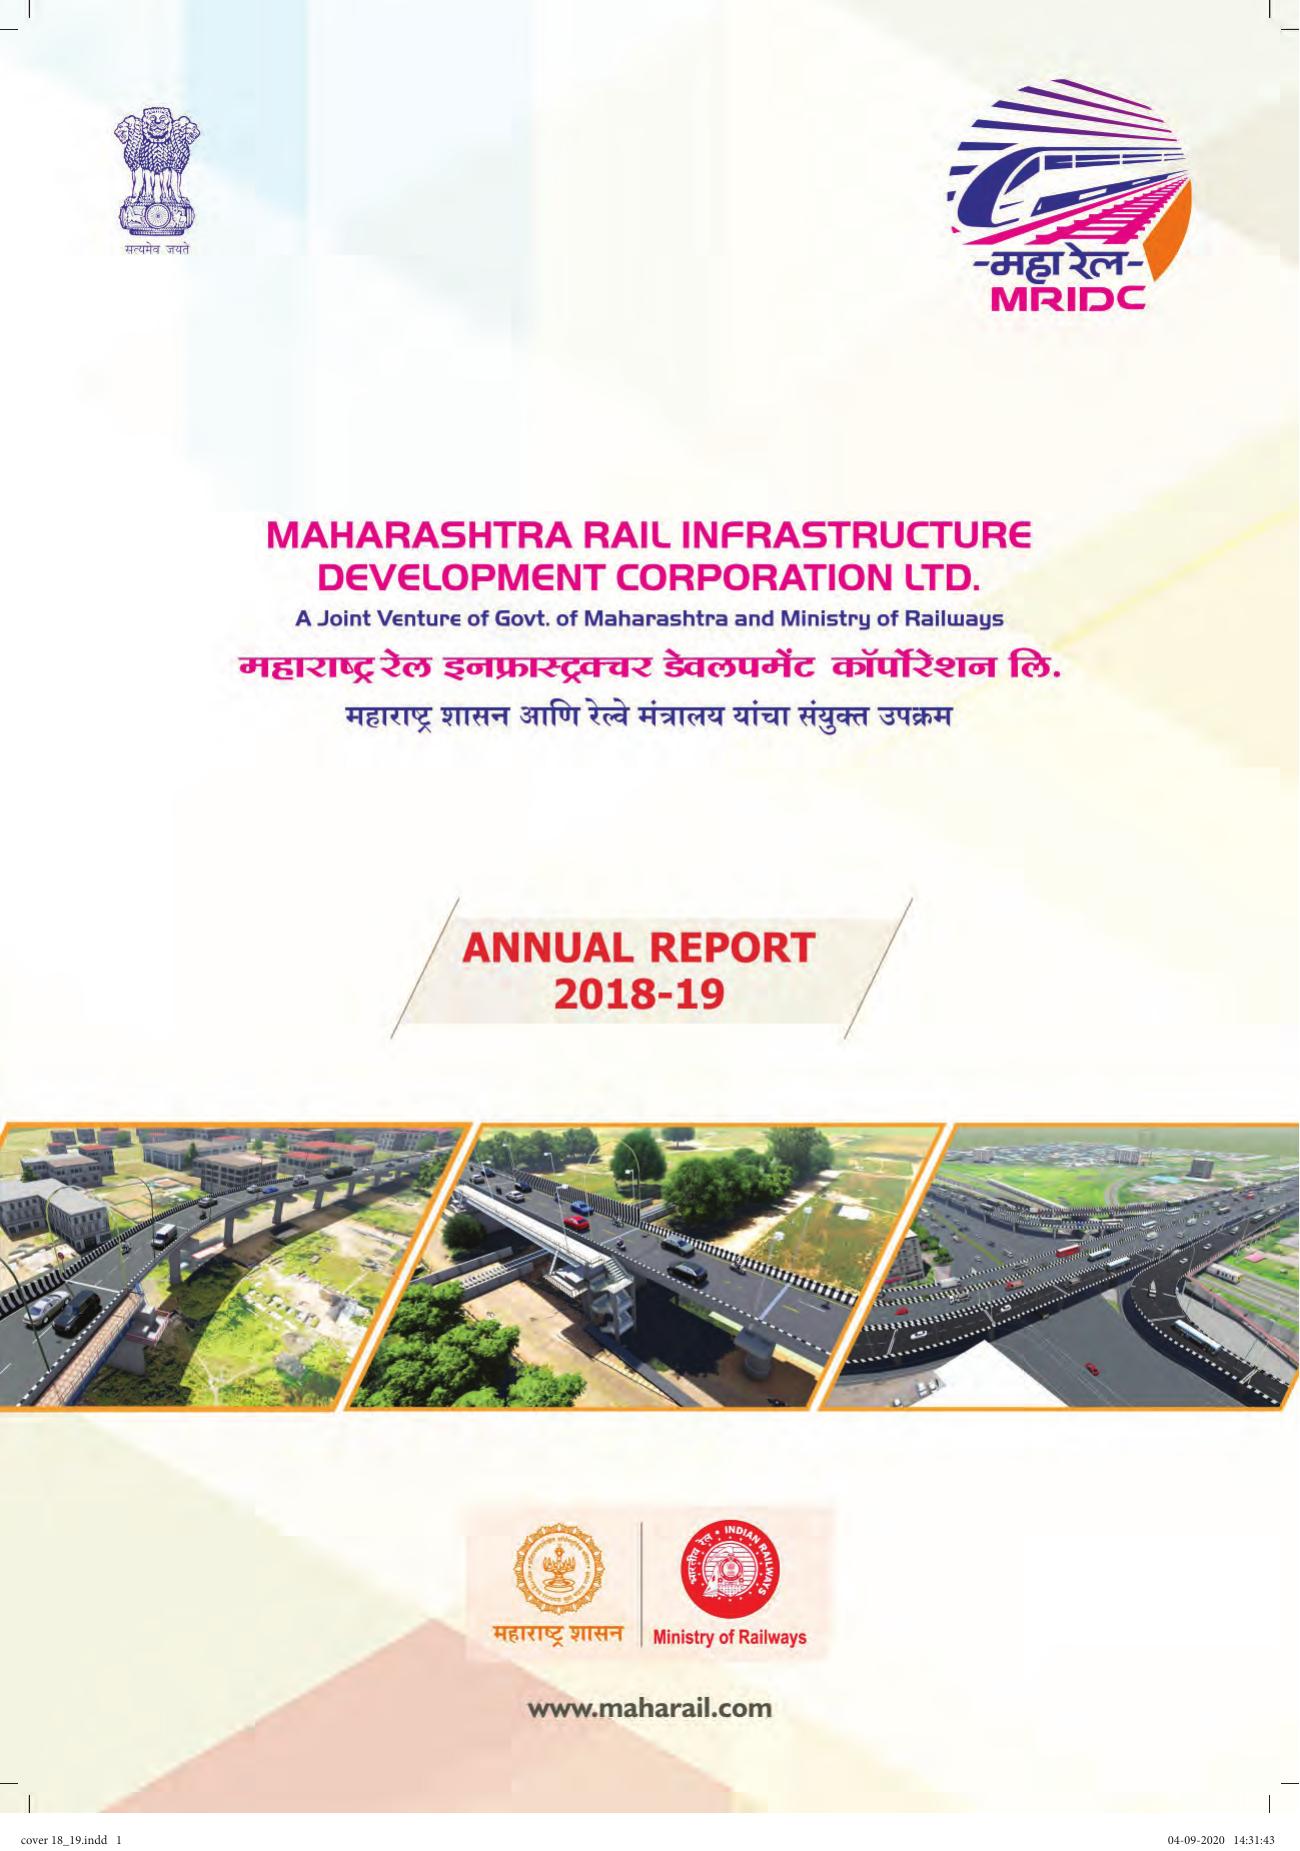 MAHARAIL Annual Report